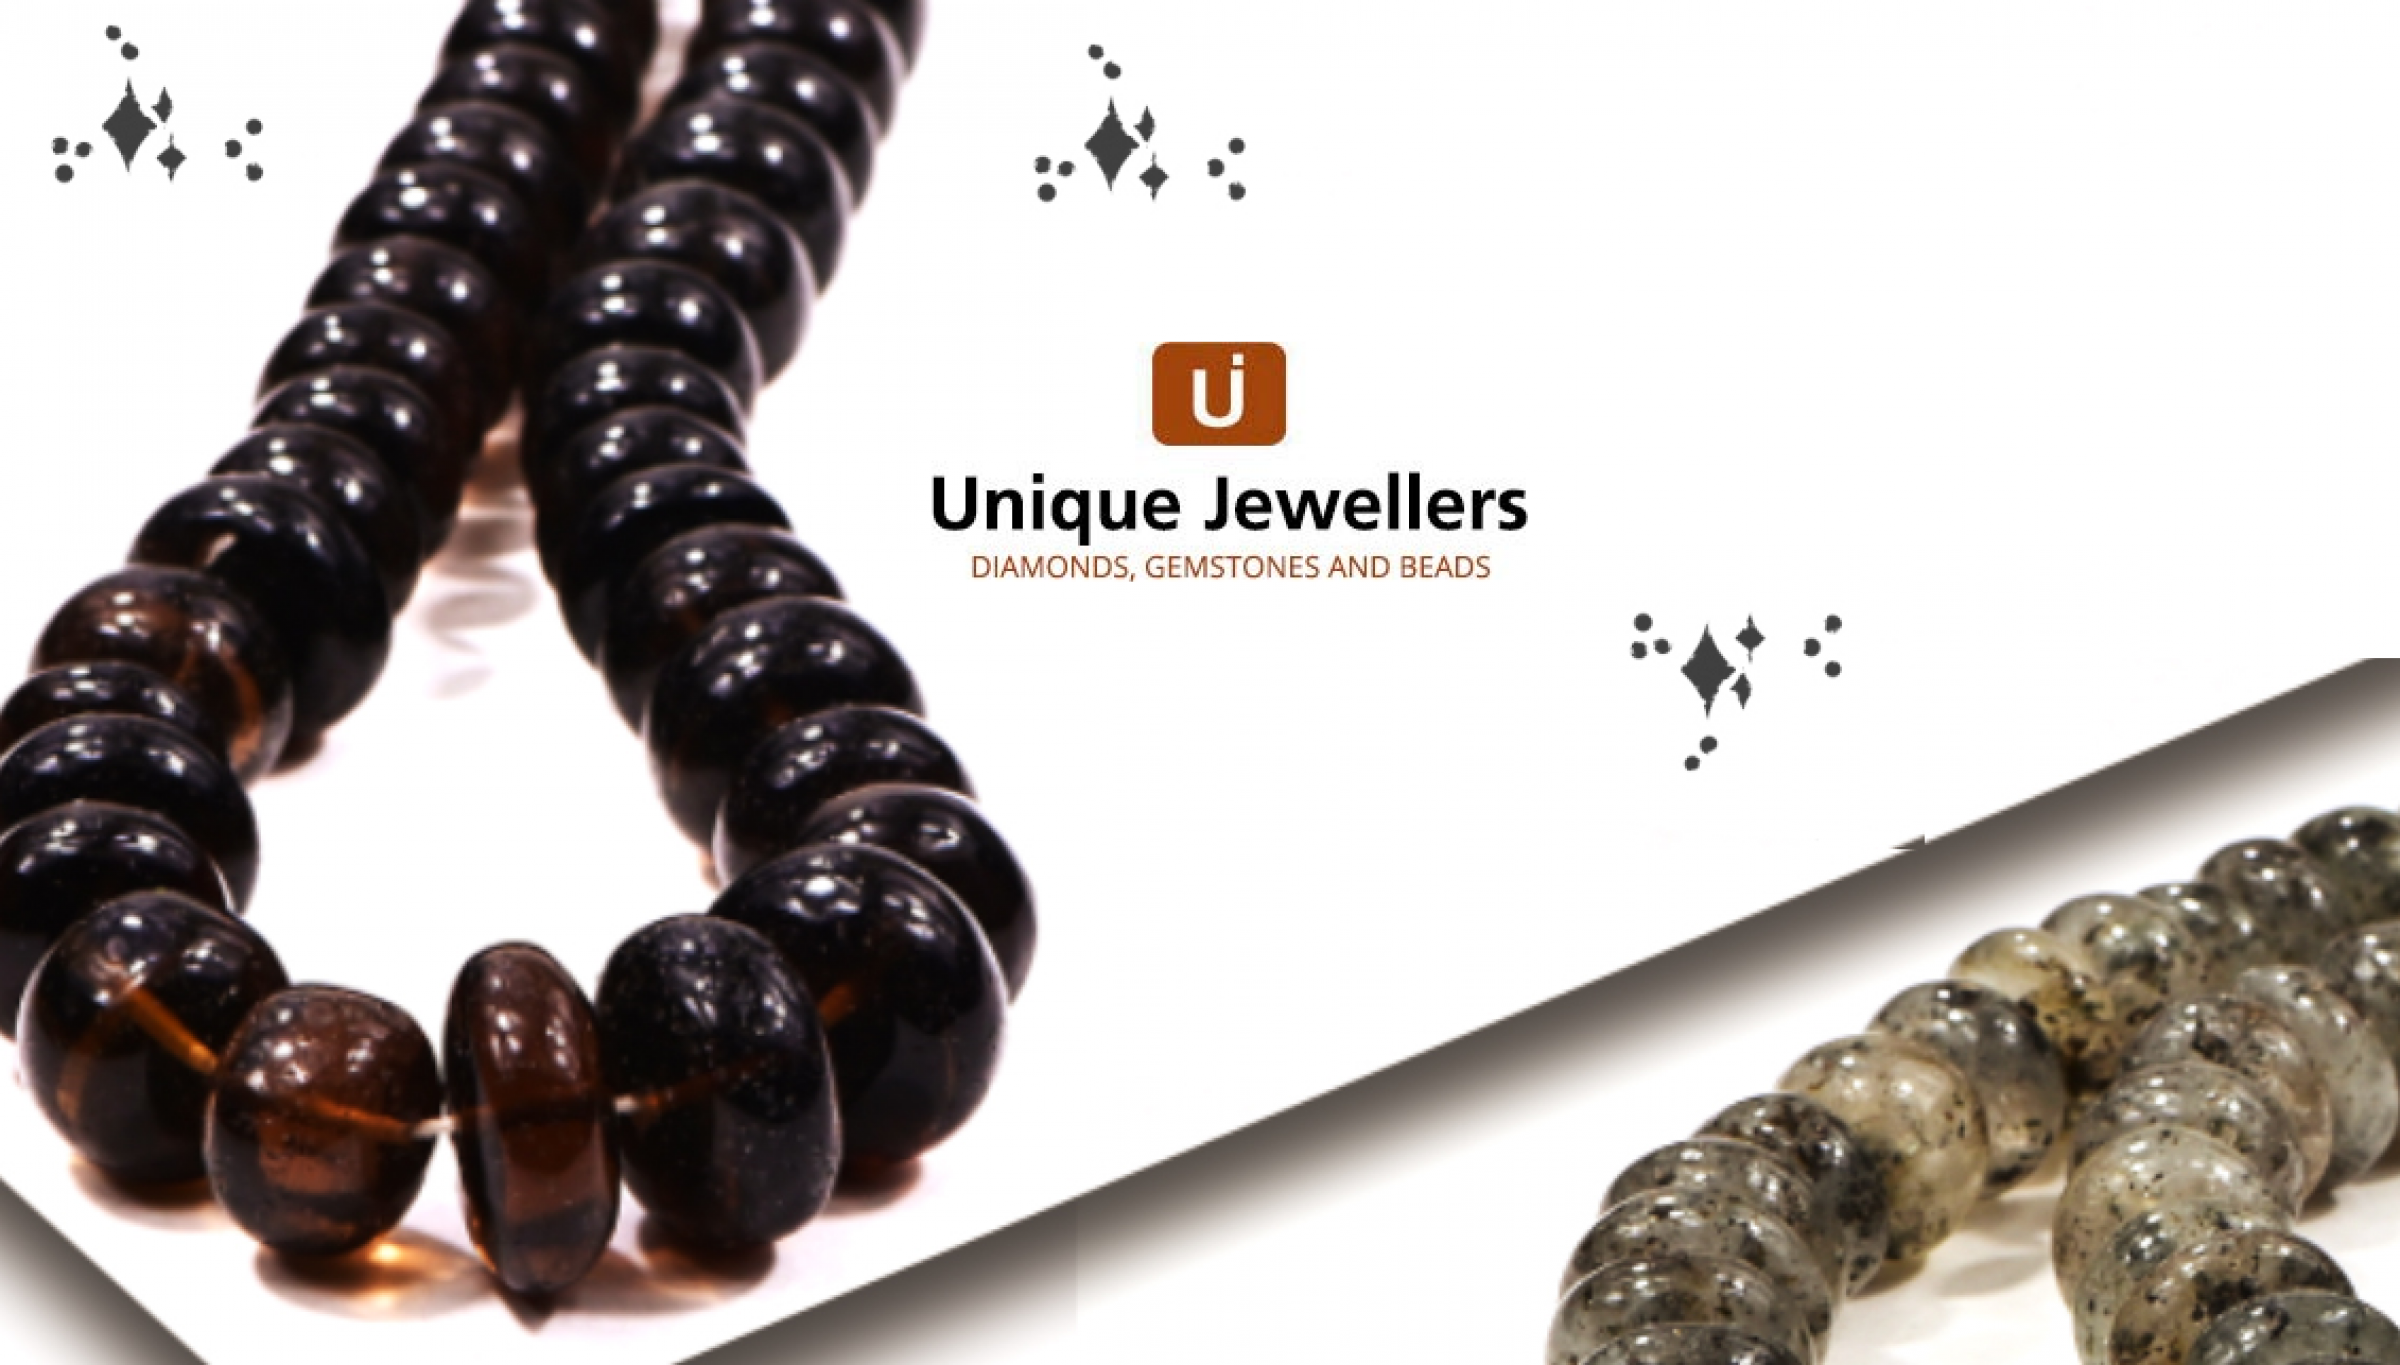 Unique Jewellers